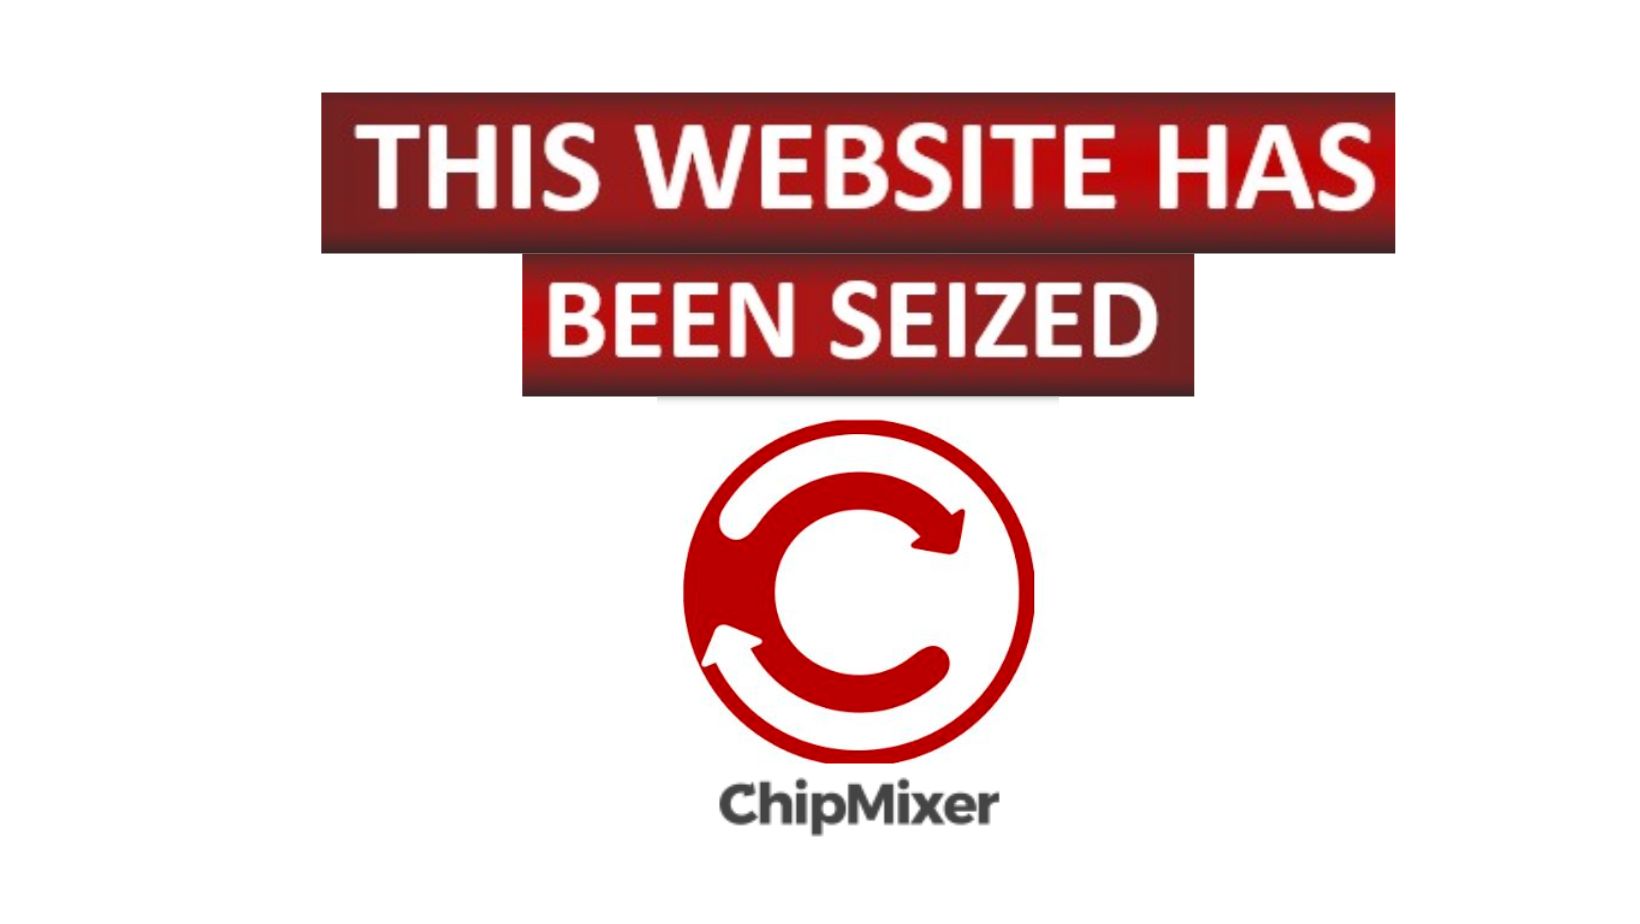 ChipMixer Website Has Been Seized